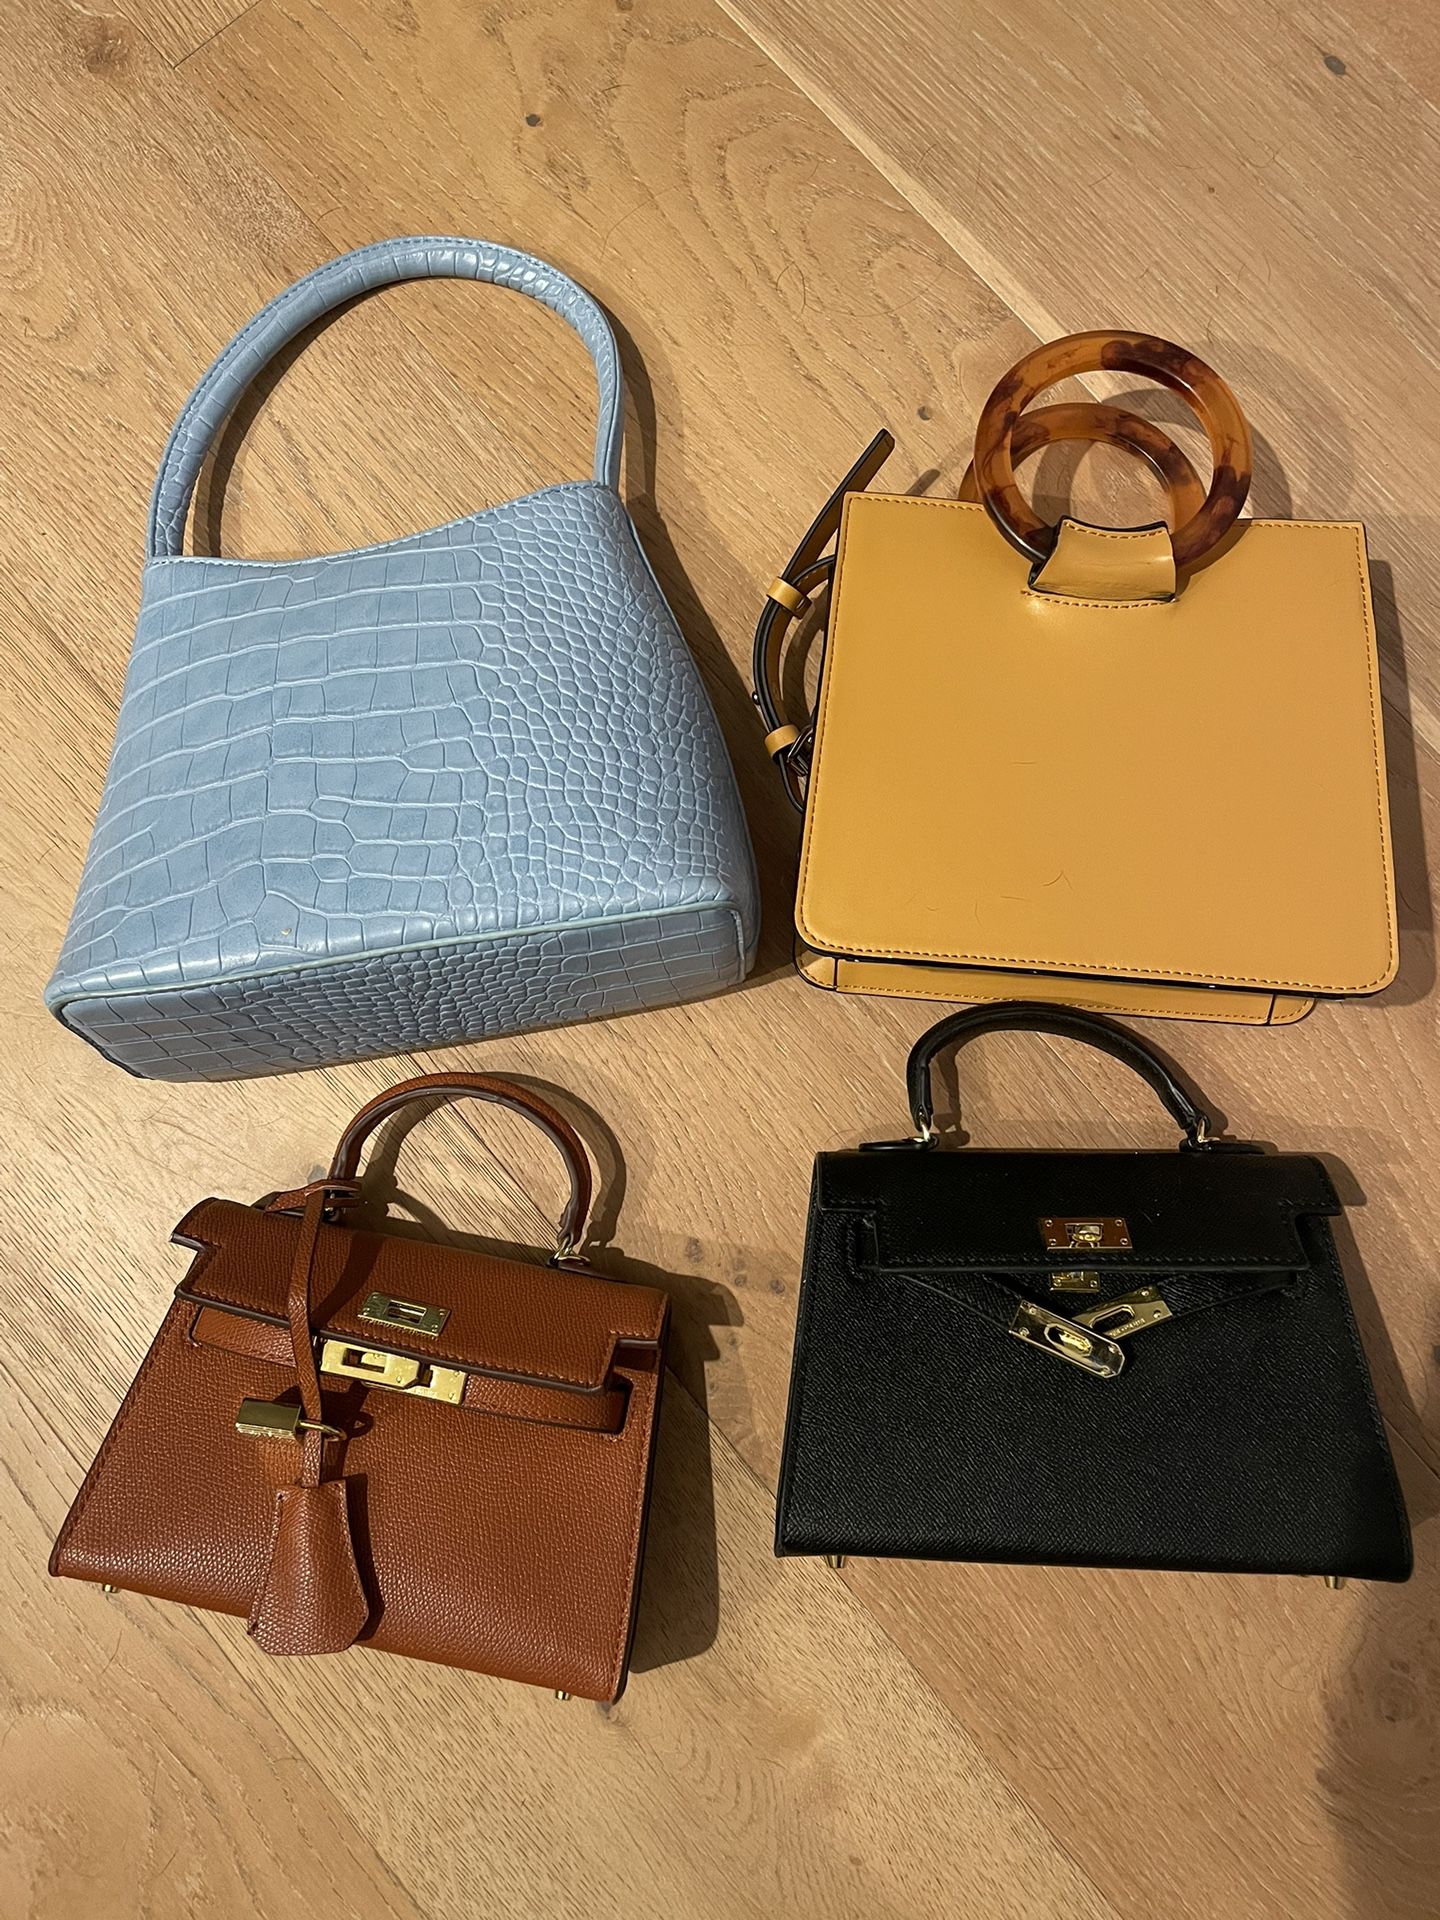 Women’s handbags for sale